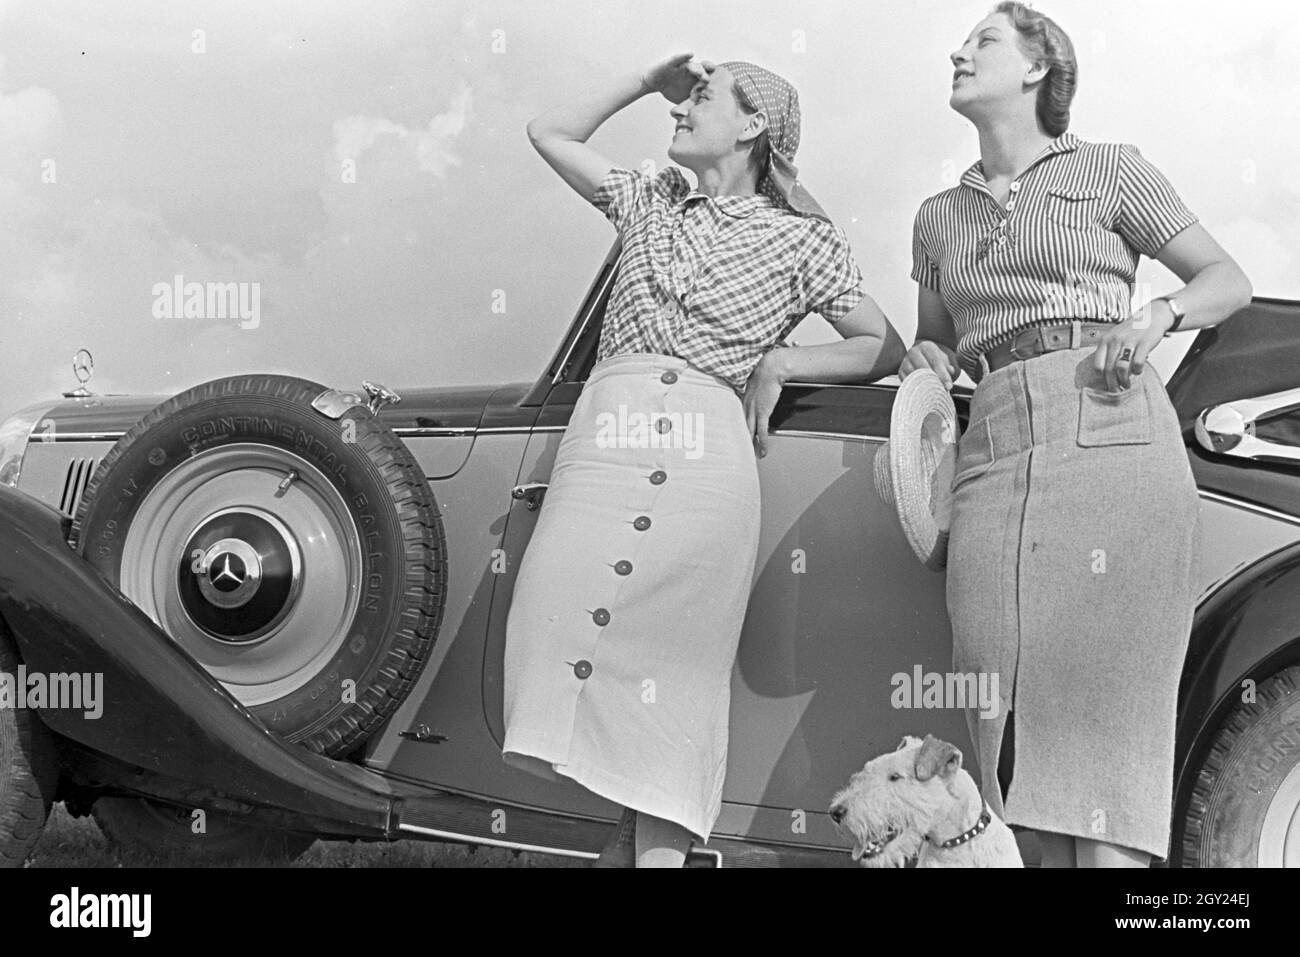 Junge Frauen bei einem Ausflug mit den Cabrios auf den Berg im Mittleren Schwarzwald Brend, Deutschland 1930 er Jahre. Les jeunes femmes sur un voyage avec leur camion sur la colline de Brend la Forêt-Noire, Allemagne 1930. Banque D'Images